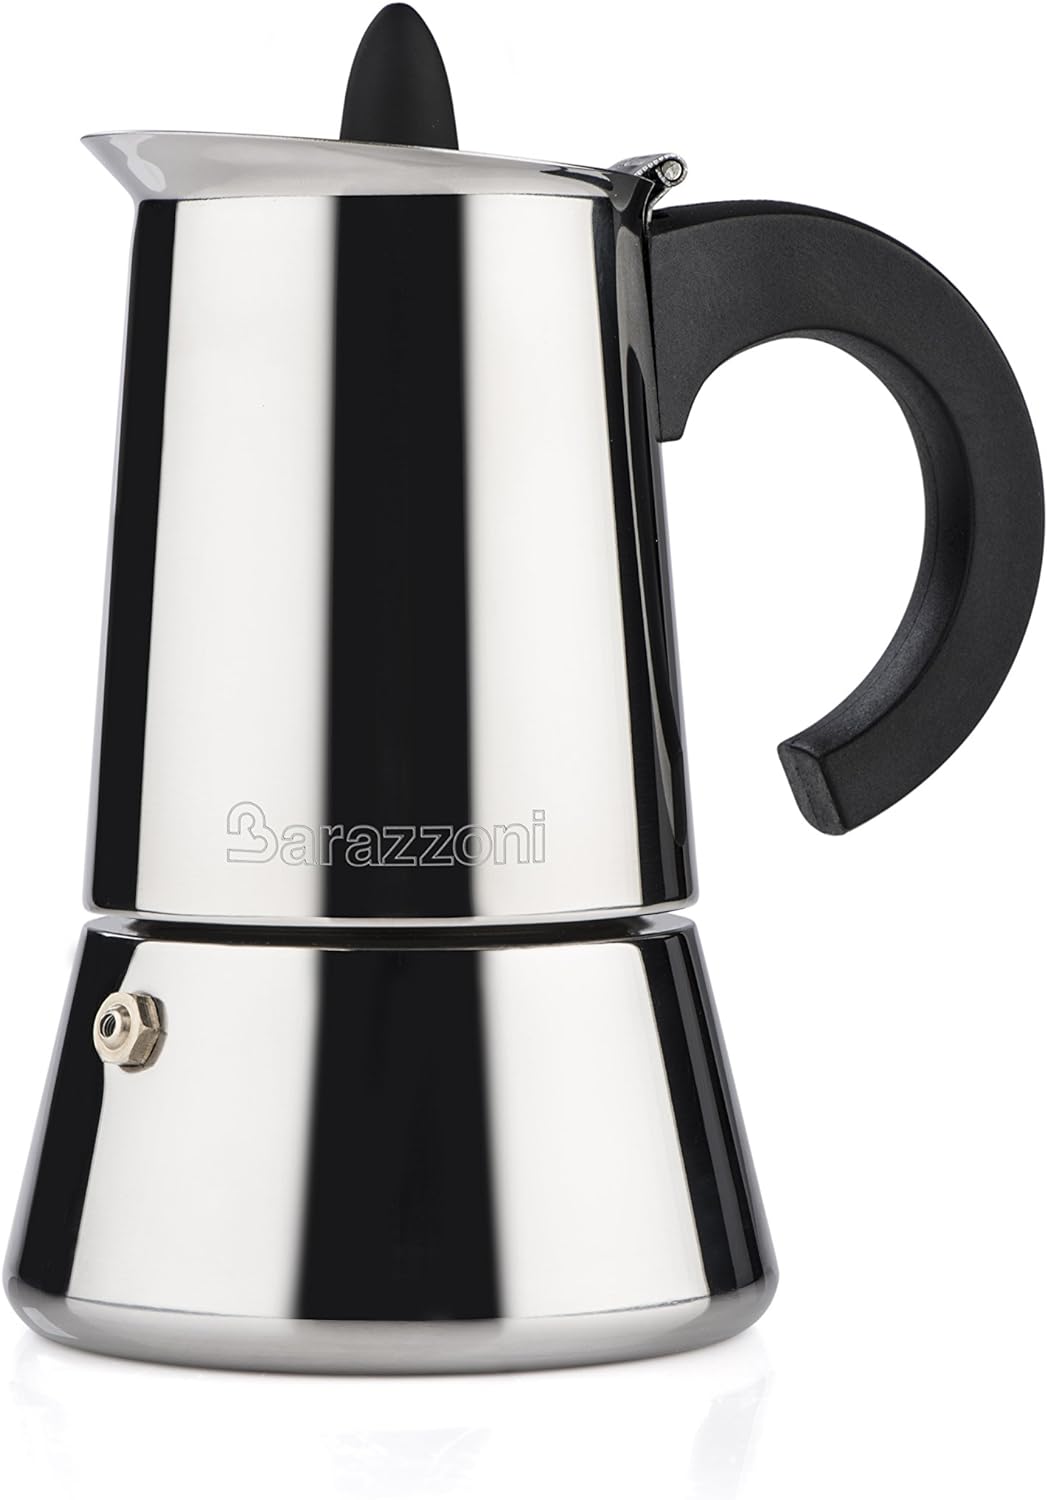 Barazzoni La Caffettiera Inox Espresso Maker, 6 Cups, Stainless Steel, Gray, 11.3 x 14.8 x 19.7 cm